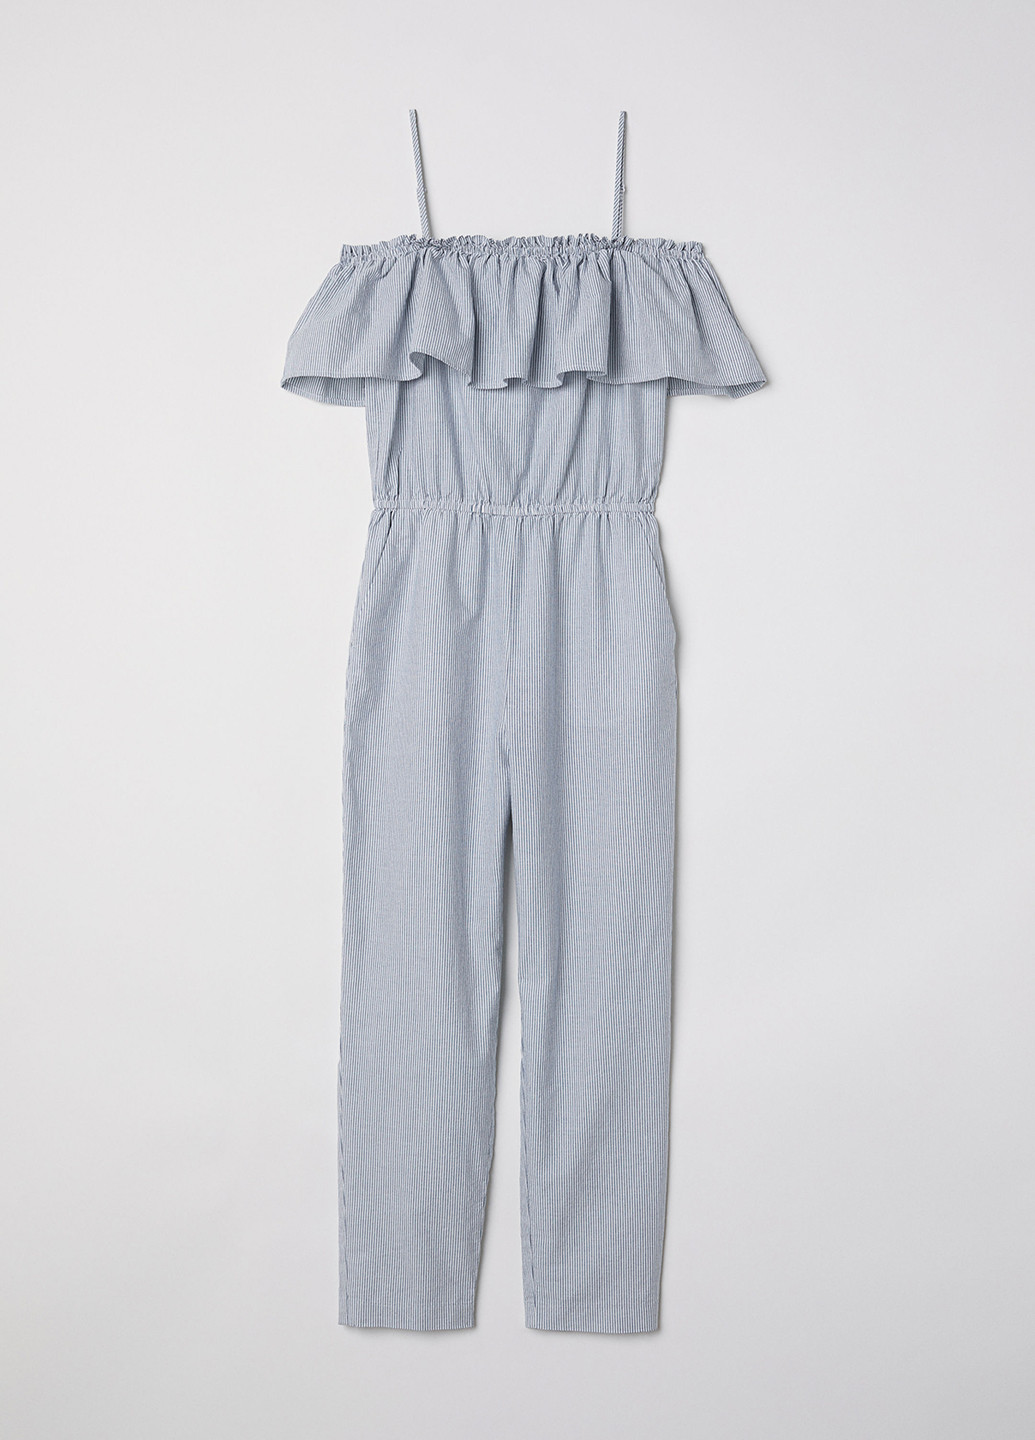 Комбинезон H&M комбинезон-брюки полоска голубой кэжуал